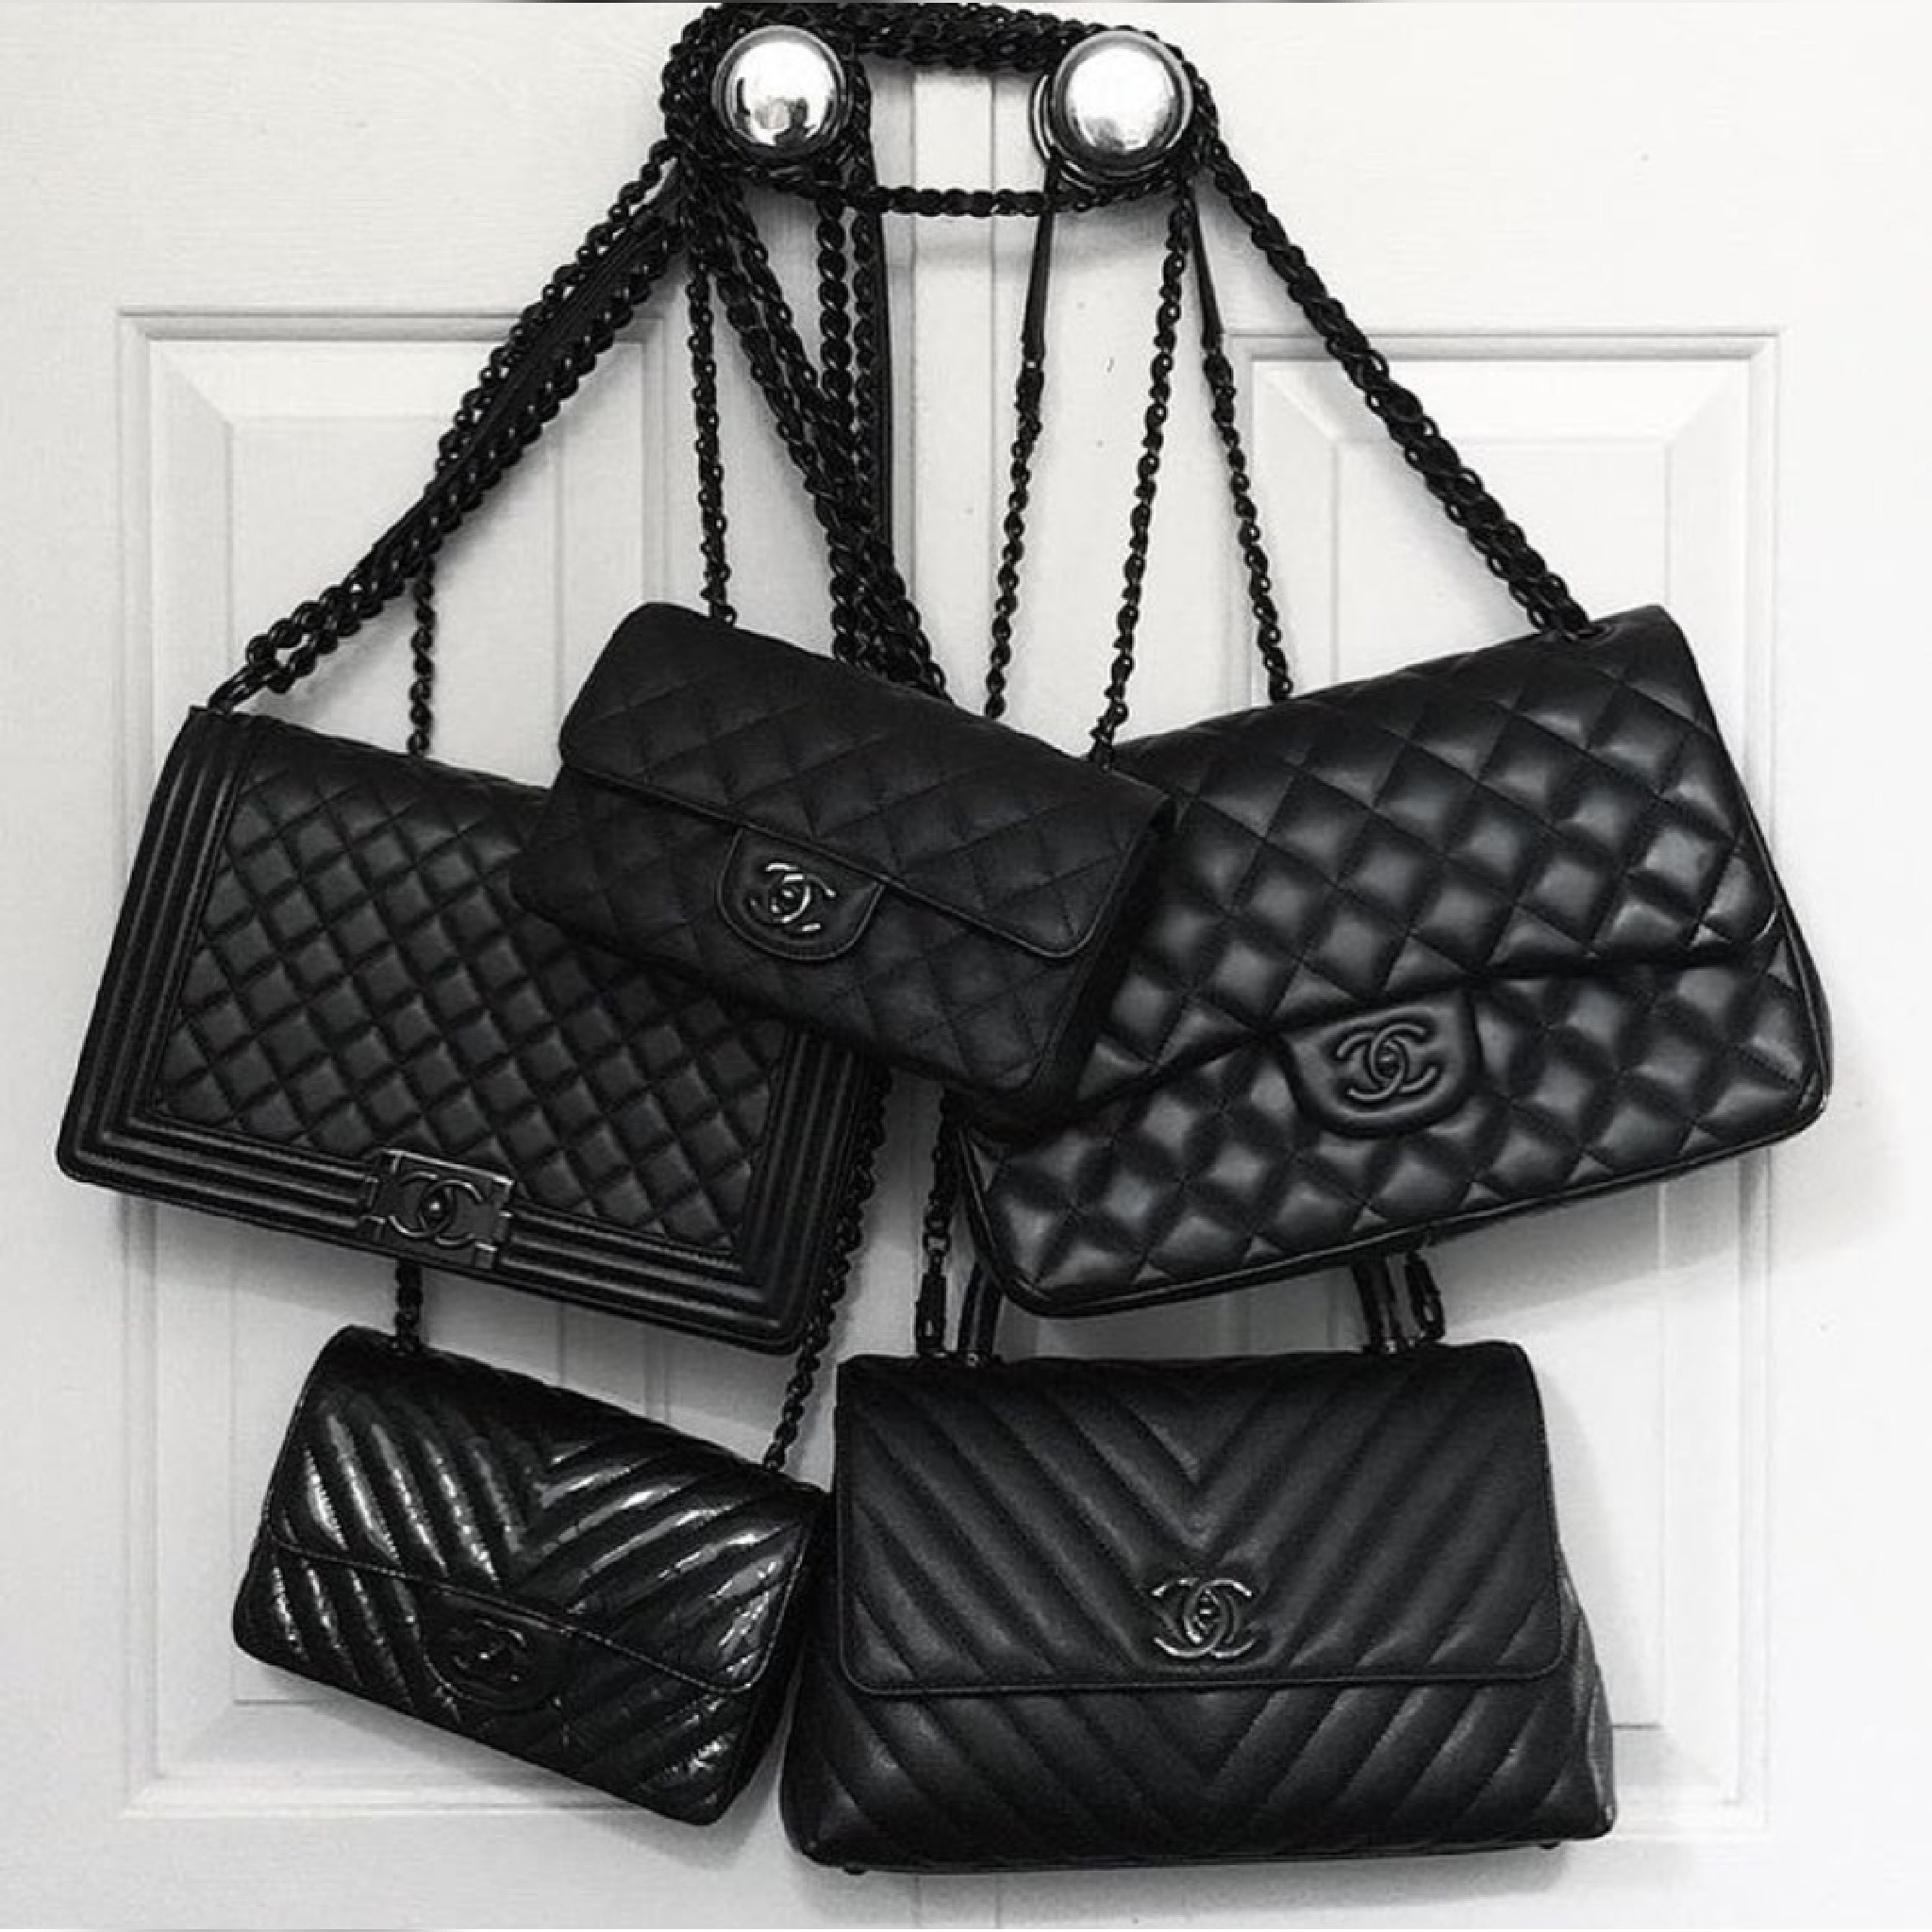 Chanel So Black Matelasse Patent Leather Single Flap Bag, Chanel Handbags